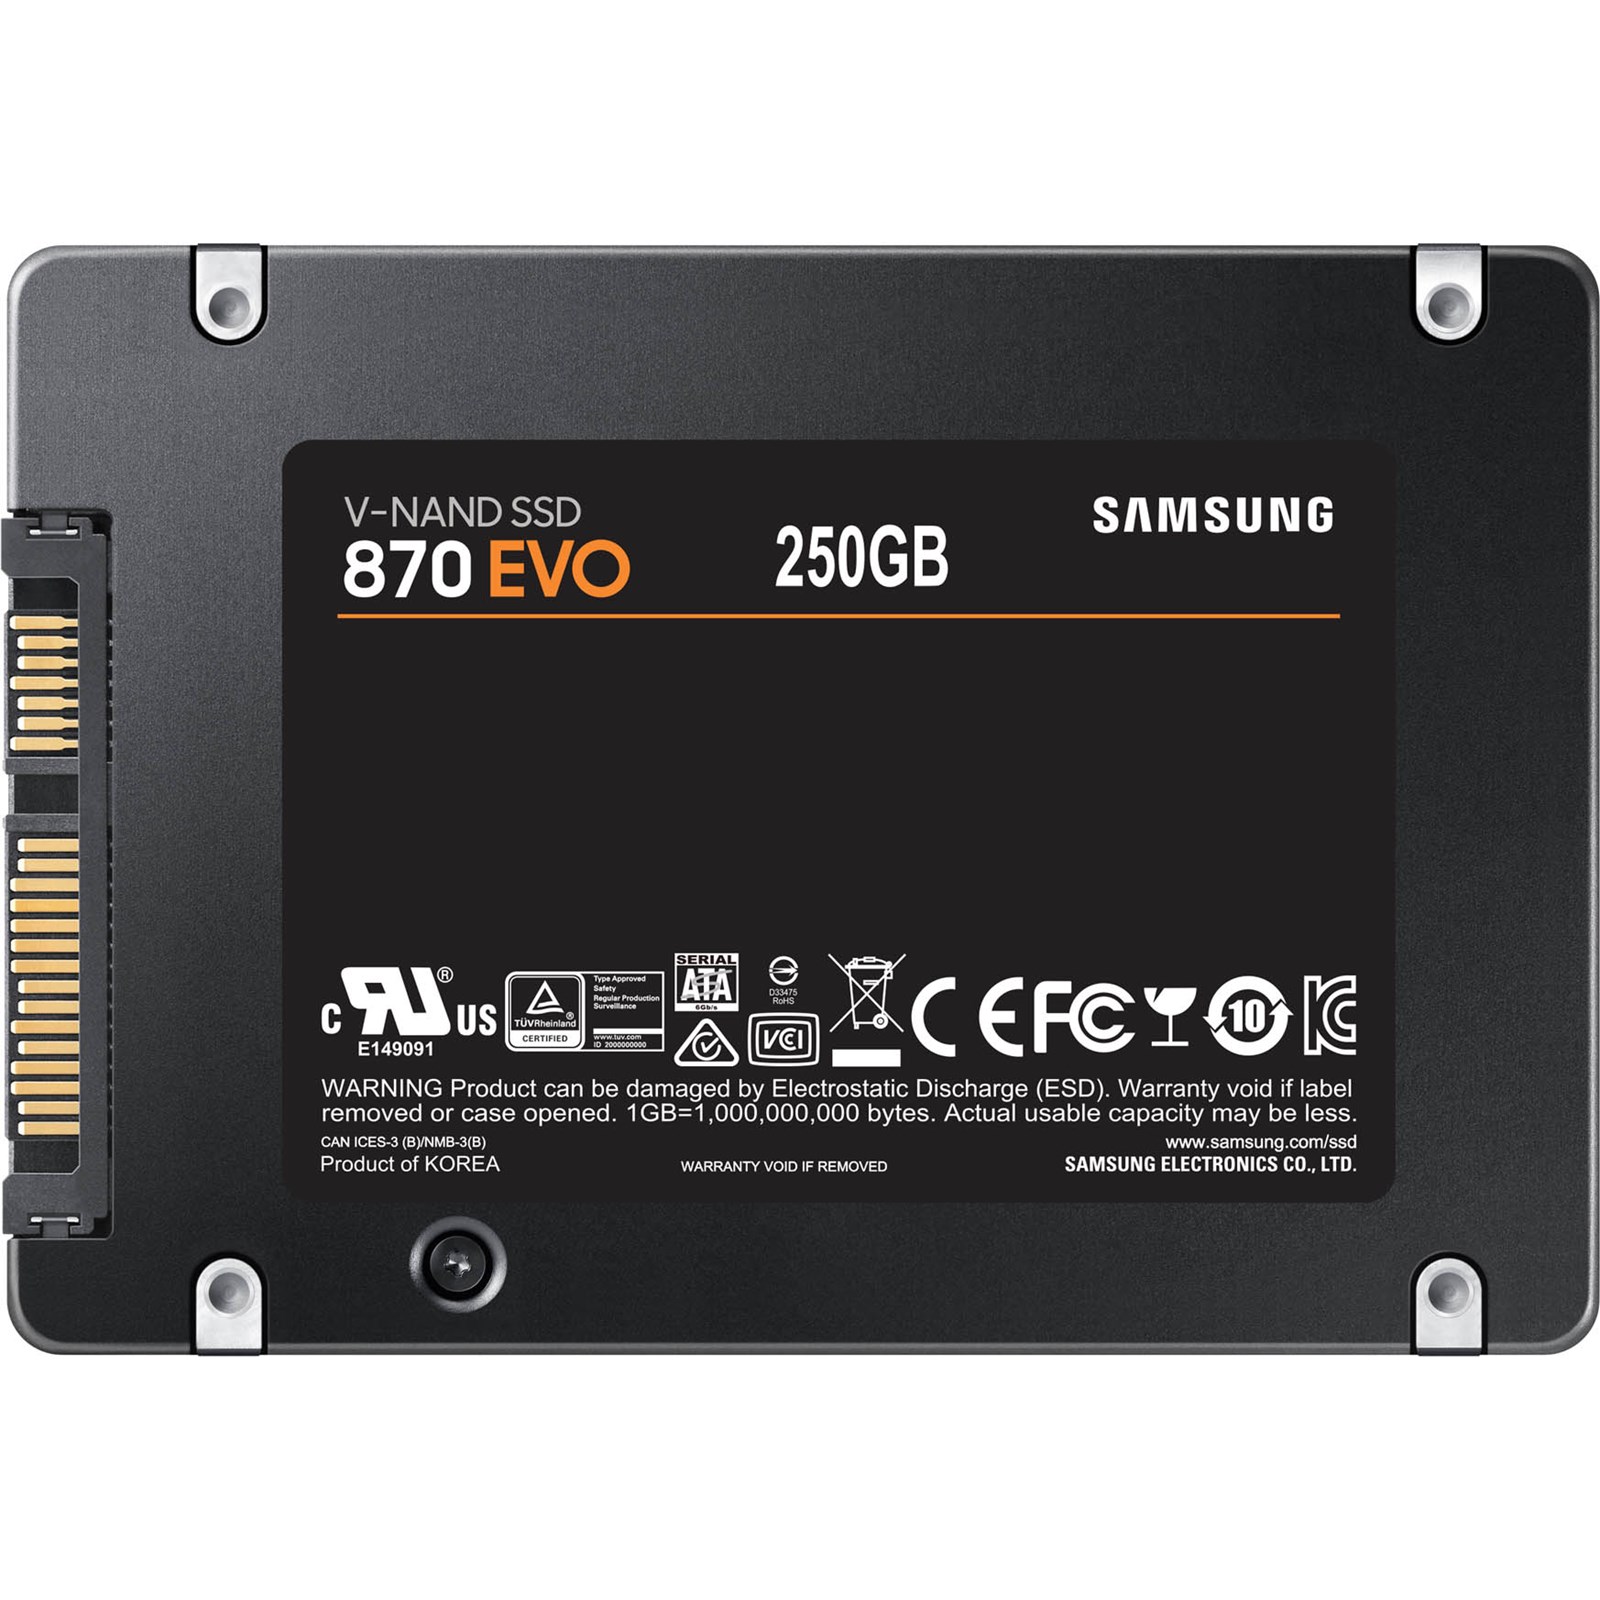 SAMSUNG SSD 870 EVO 250GB2.5'' SATA3;V-NAND MLC560MB/s read,530MB/s write